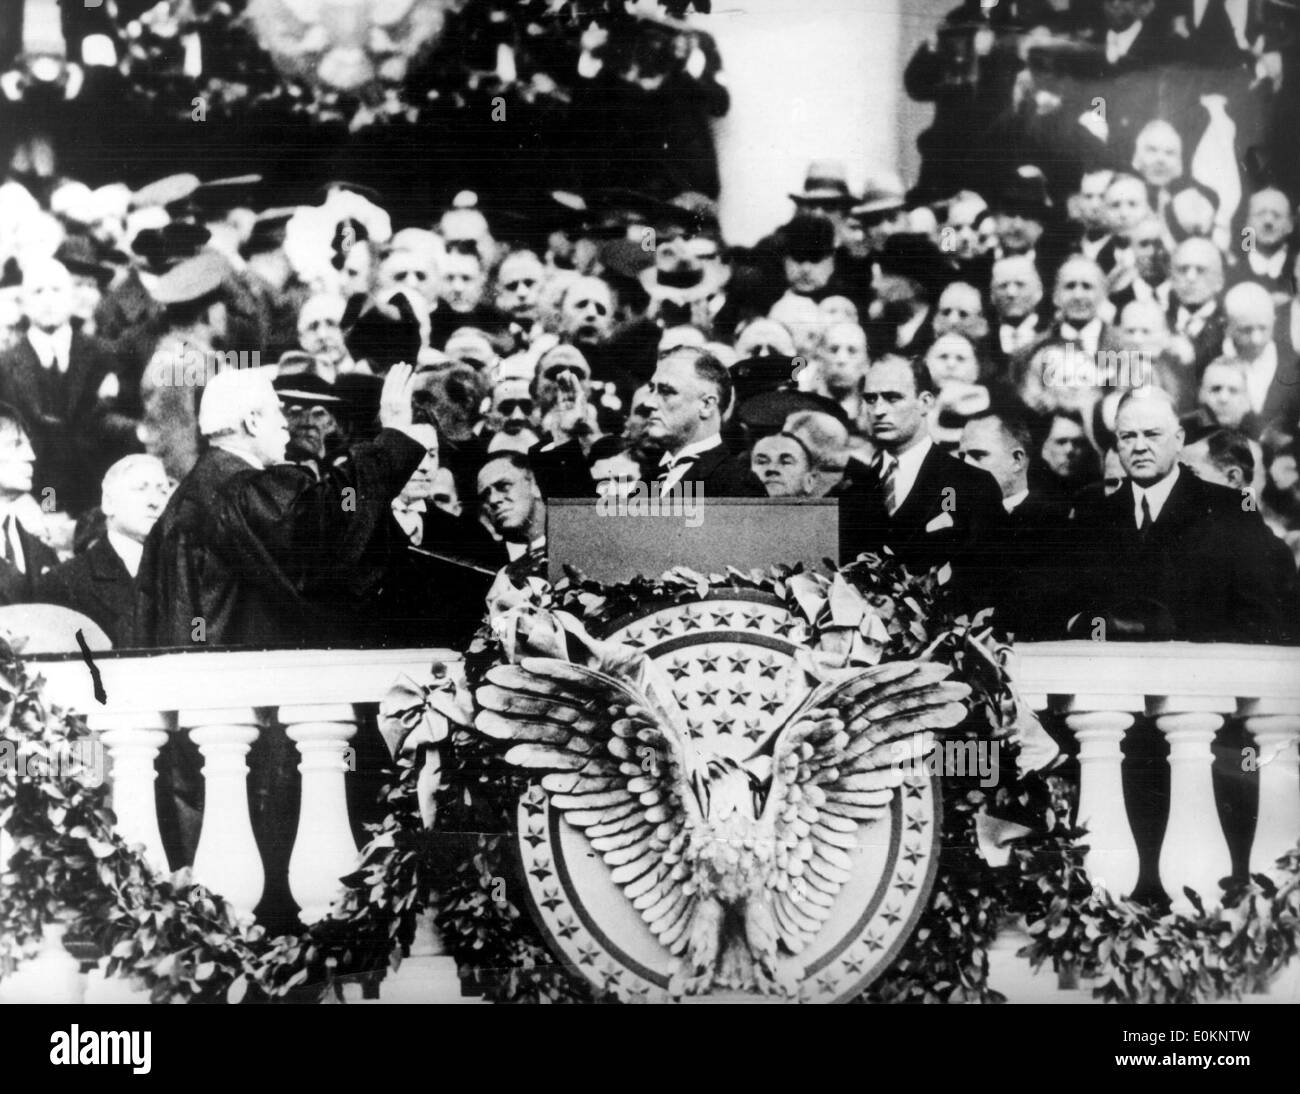 President Franklin Delano Roosevelt's inauguration in Washington D.C. Stock Photo